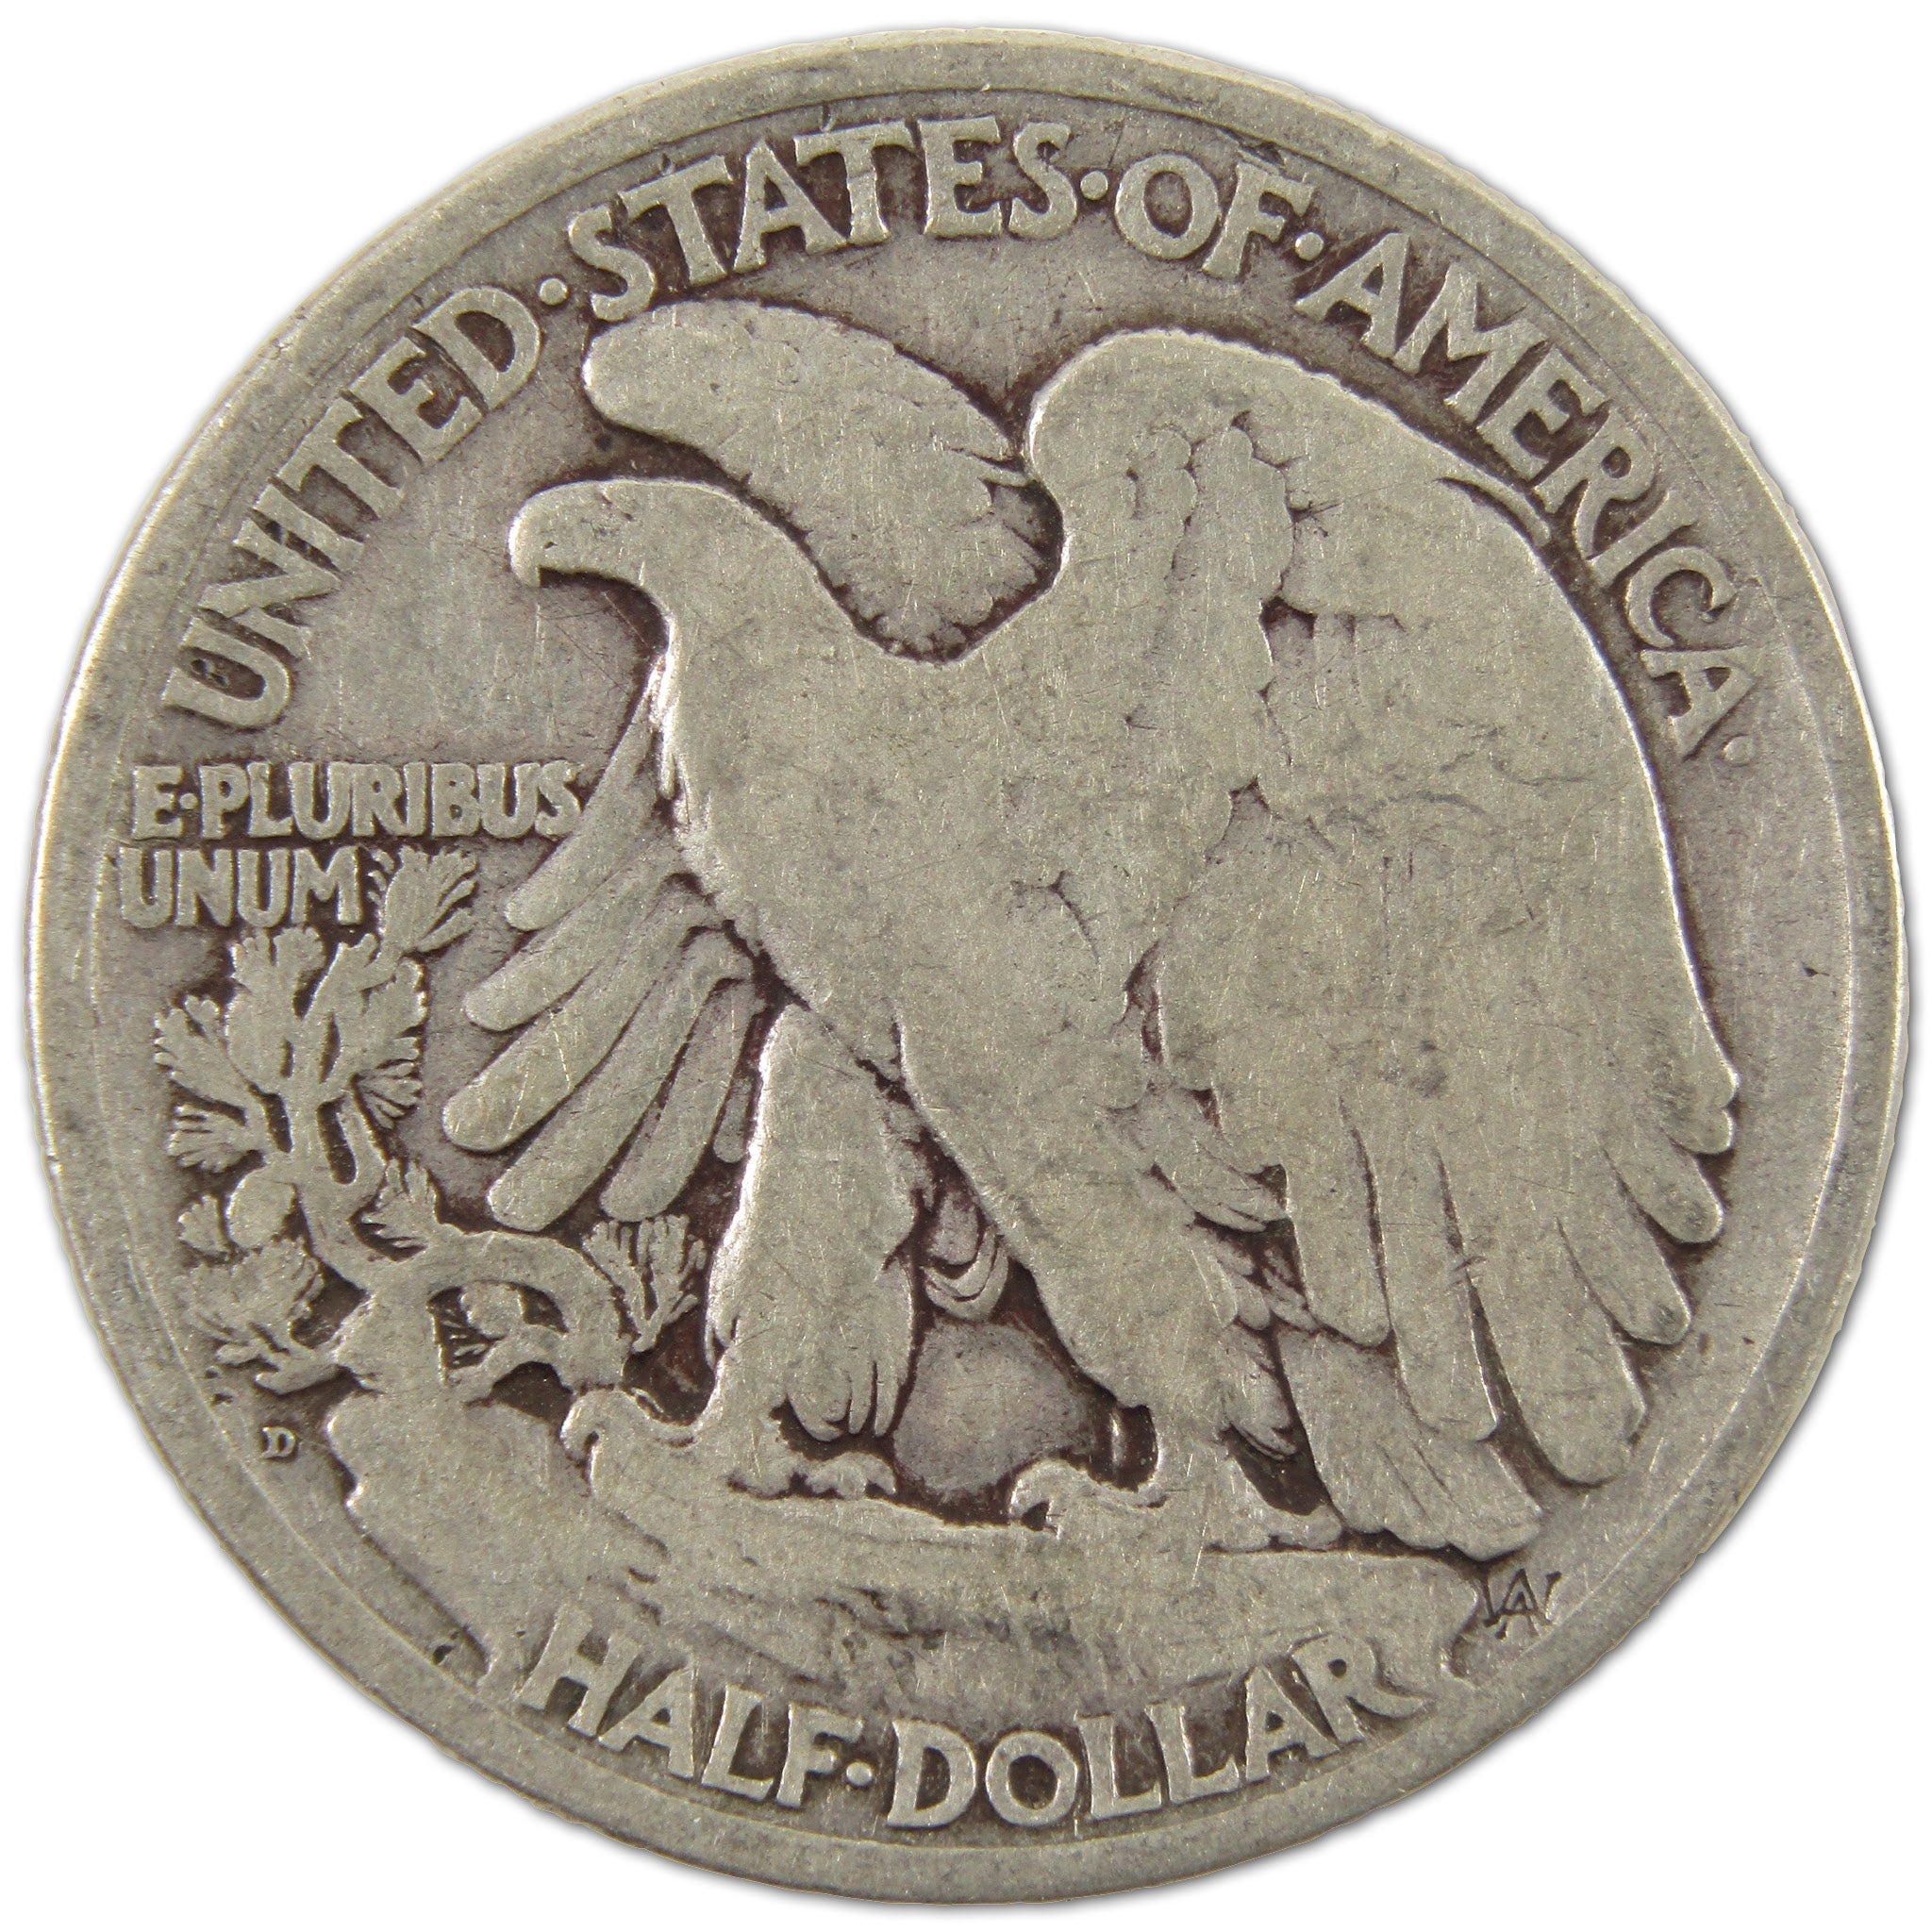 1920 D Liberty Walking Half Dollar G Good Silver 50c Coin SKU:I10780